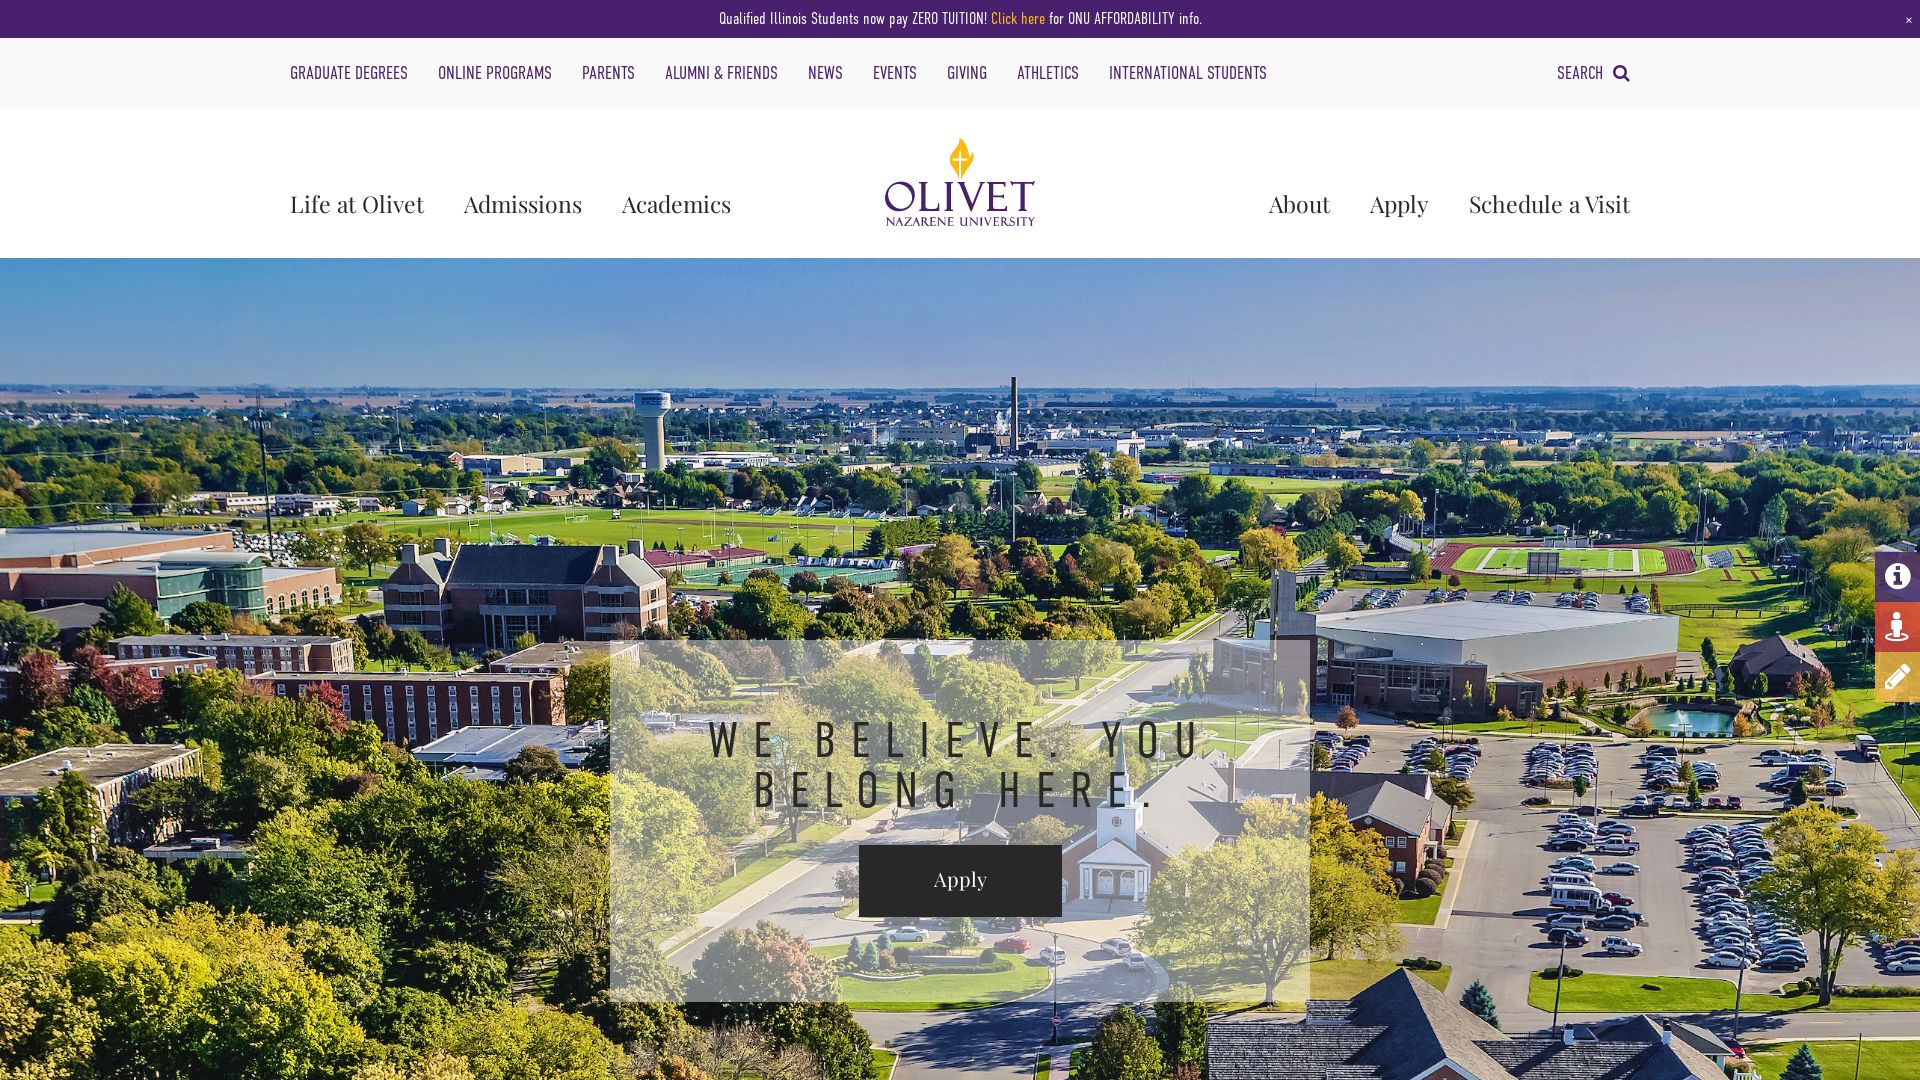 Website status olivet.edu is   ONLINE